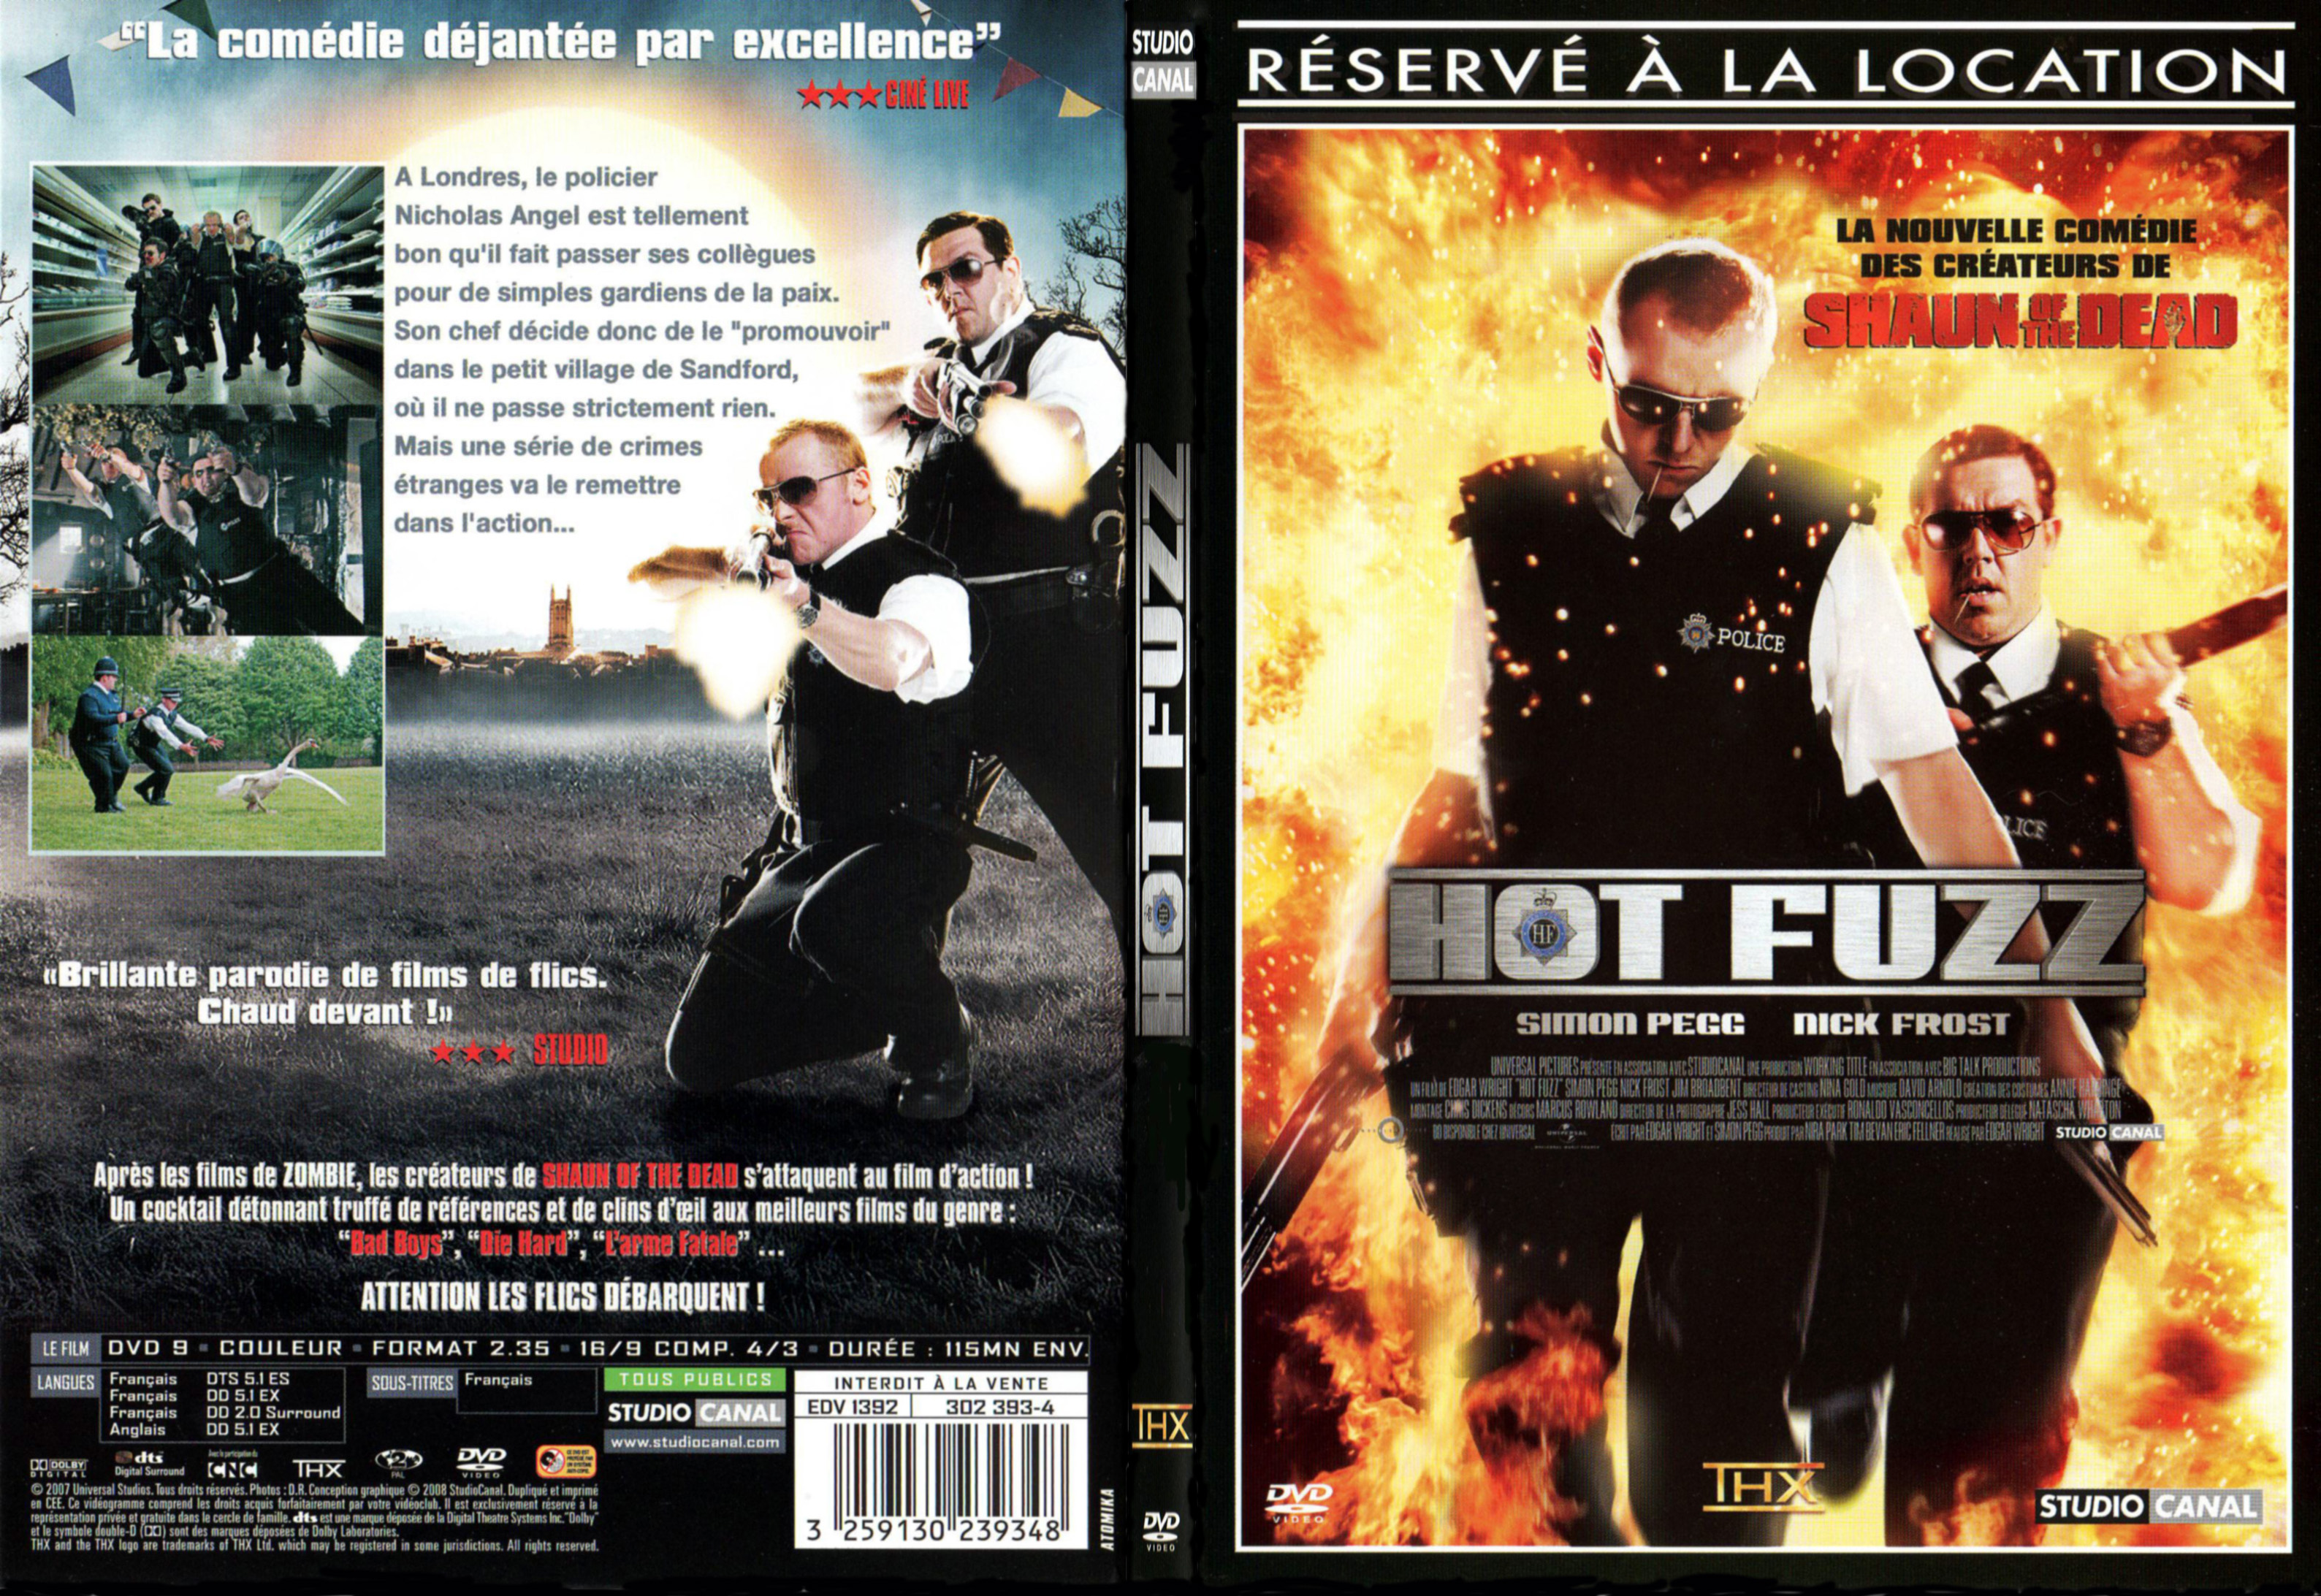 Jaquette DVD Hot fuzz - SLIM